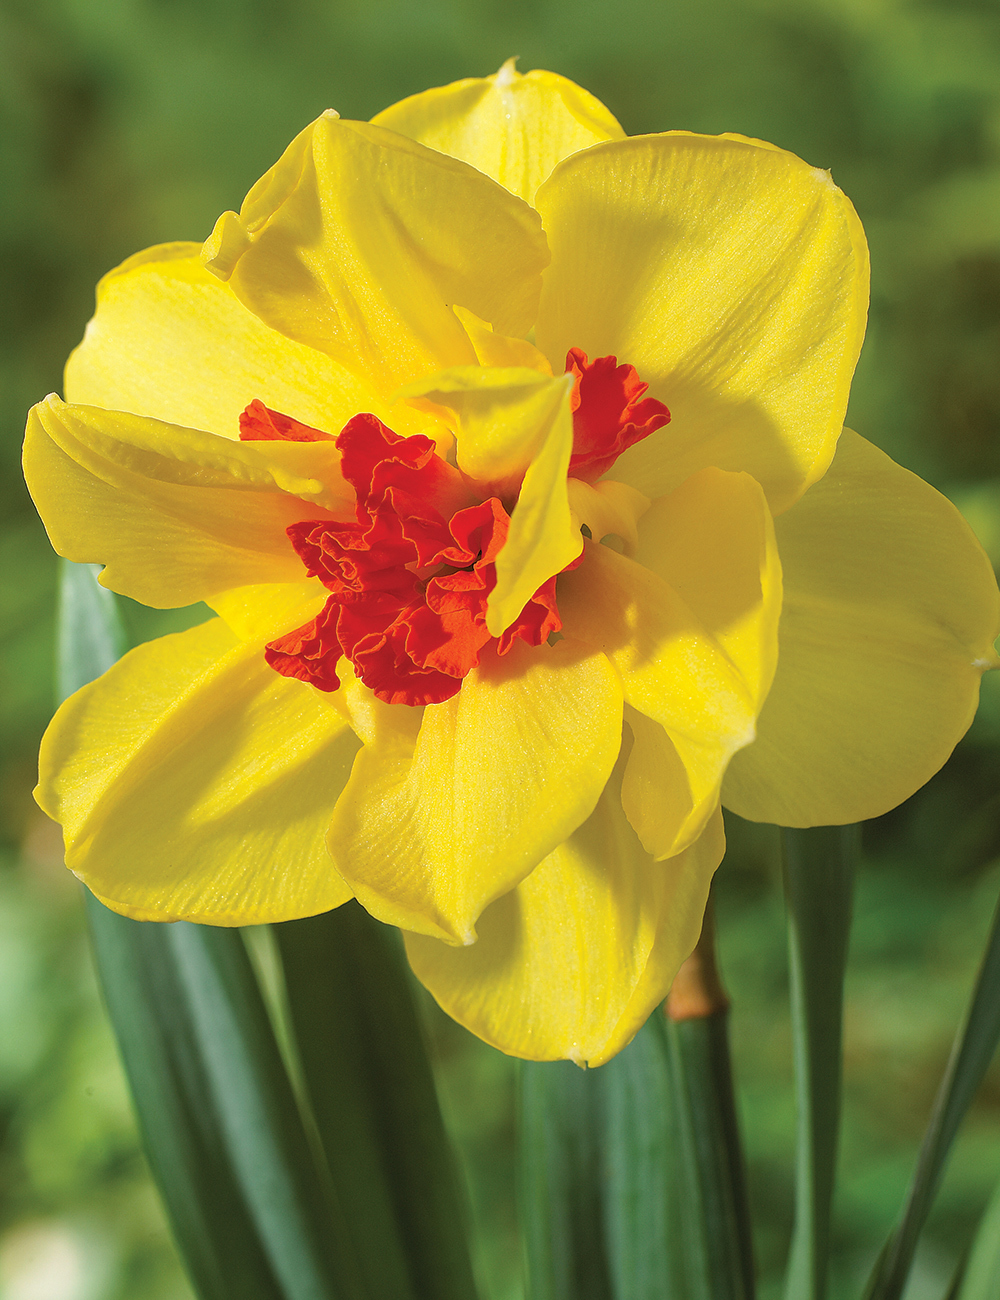 Double Daffodils 'Ascot'